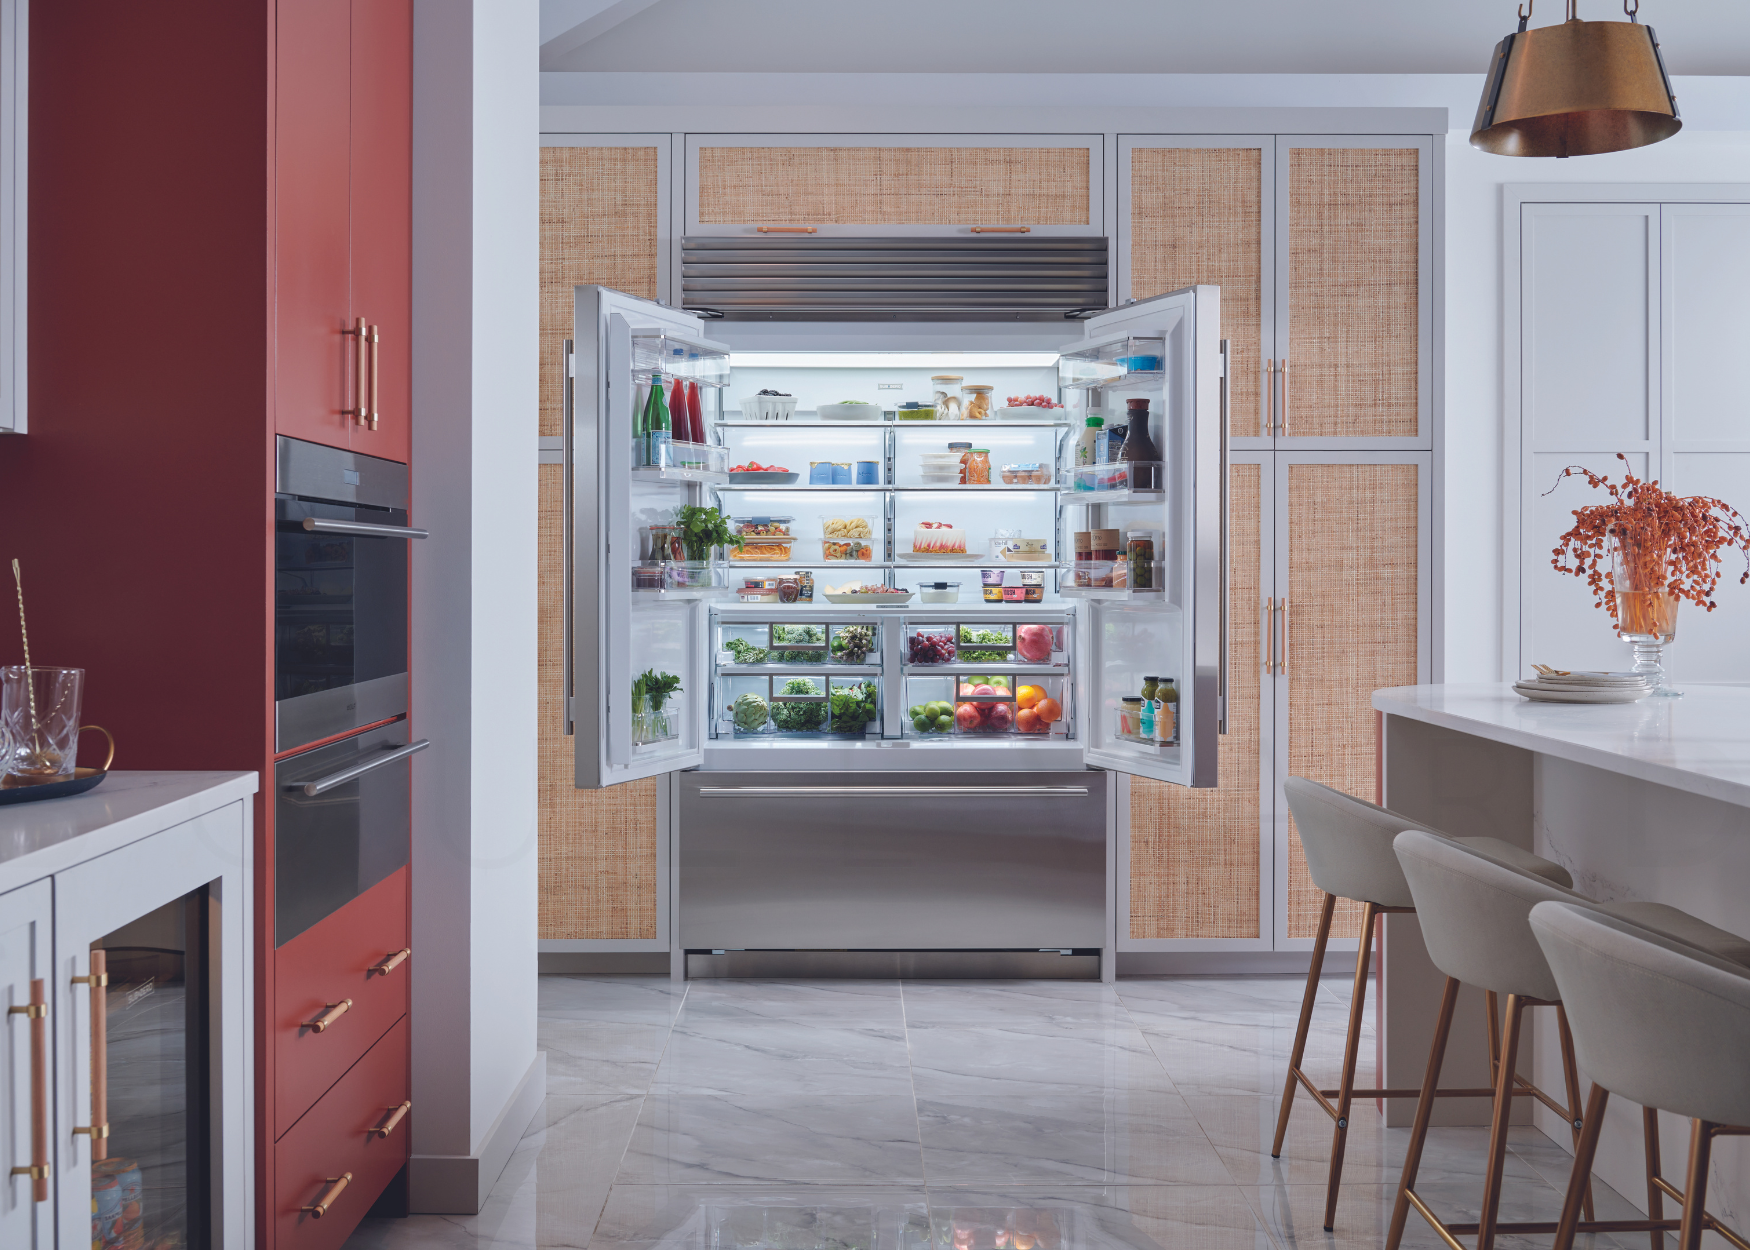 SubZero New Classic Series Refrigerator